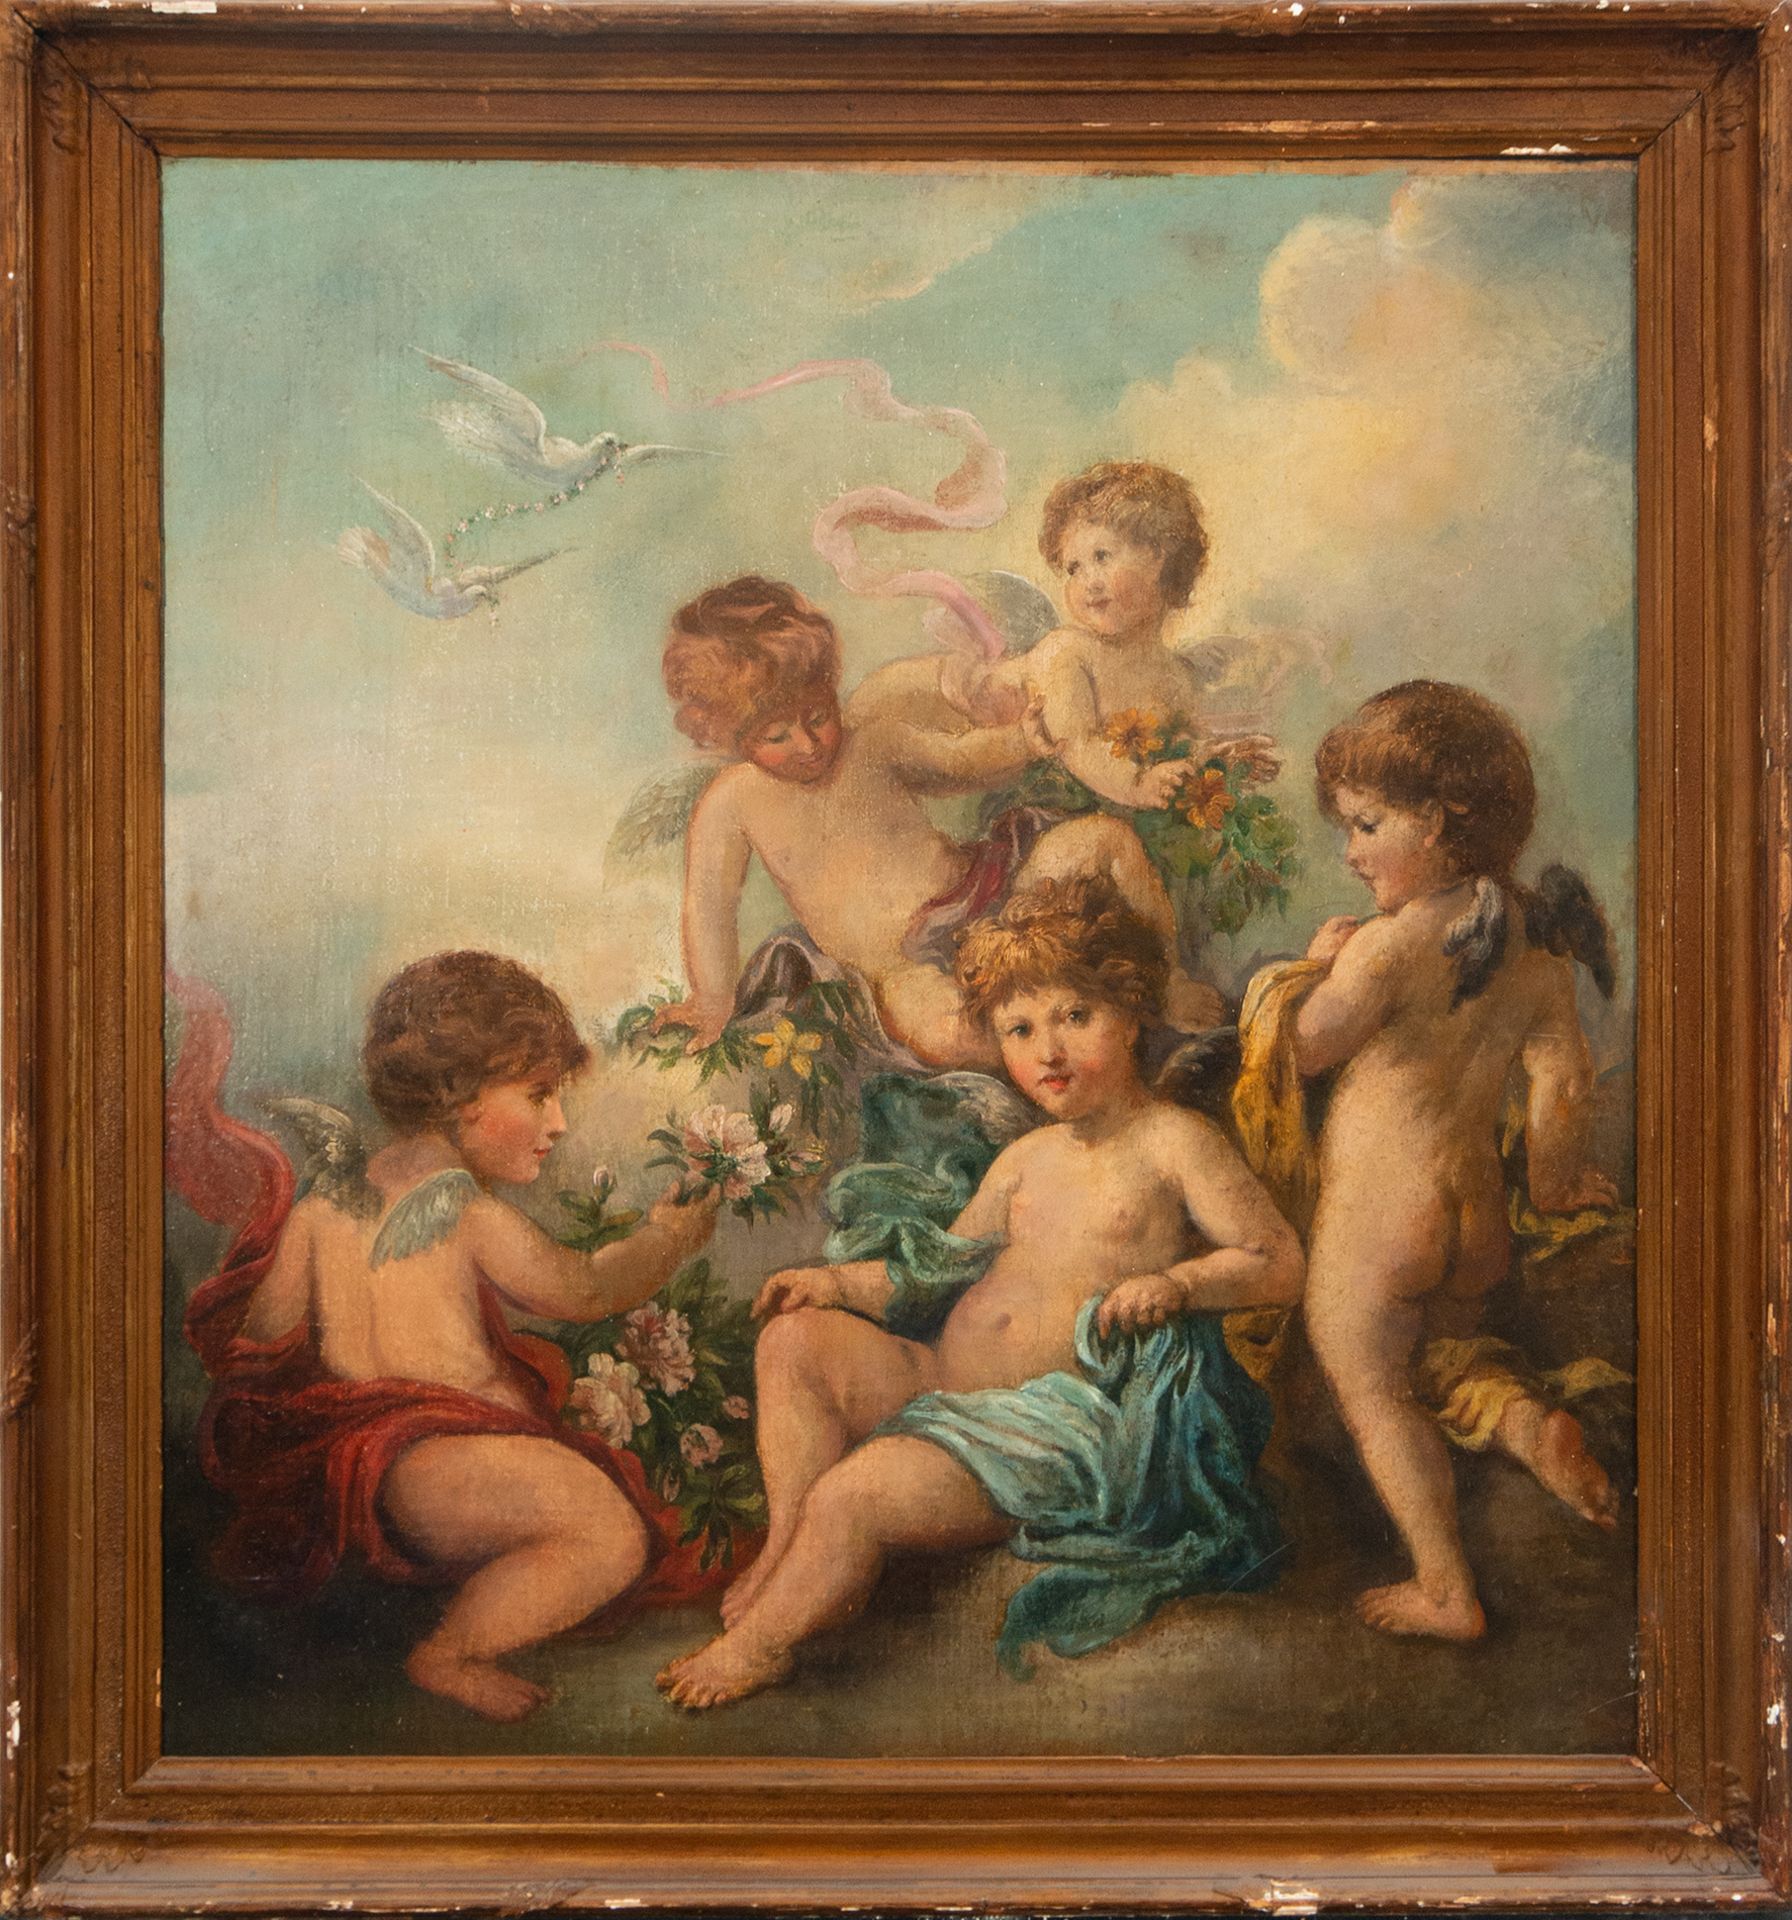 Five Cupids in Garden with Flowers, 19th century English romanticist school